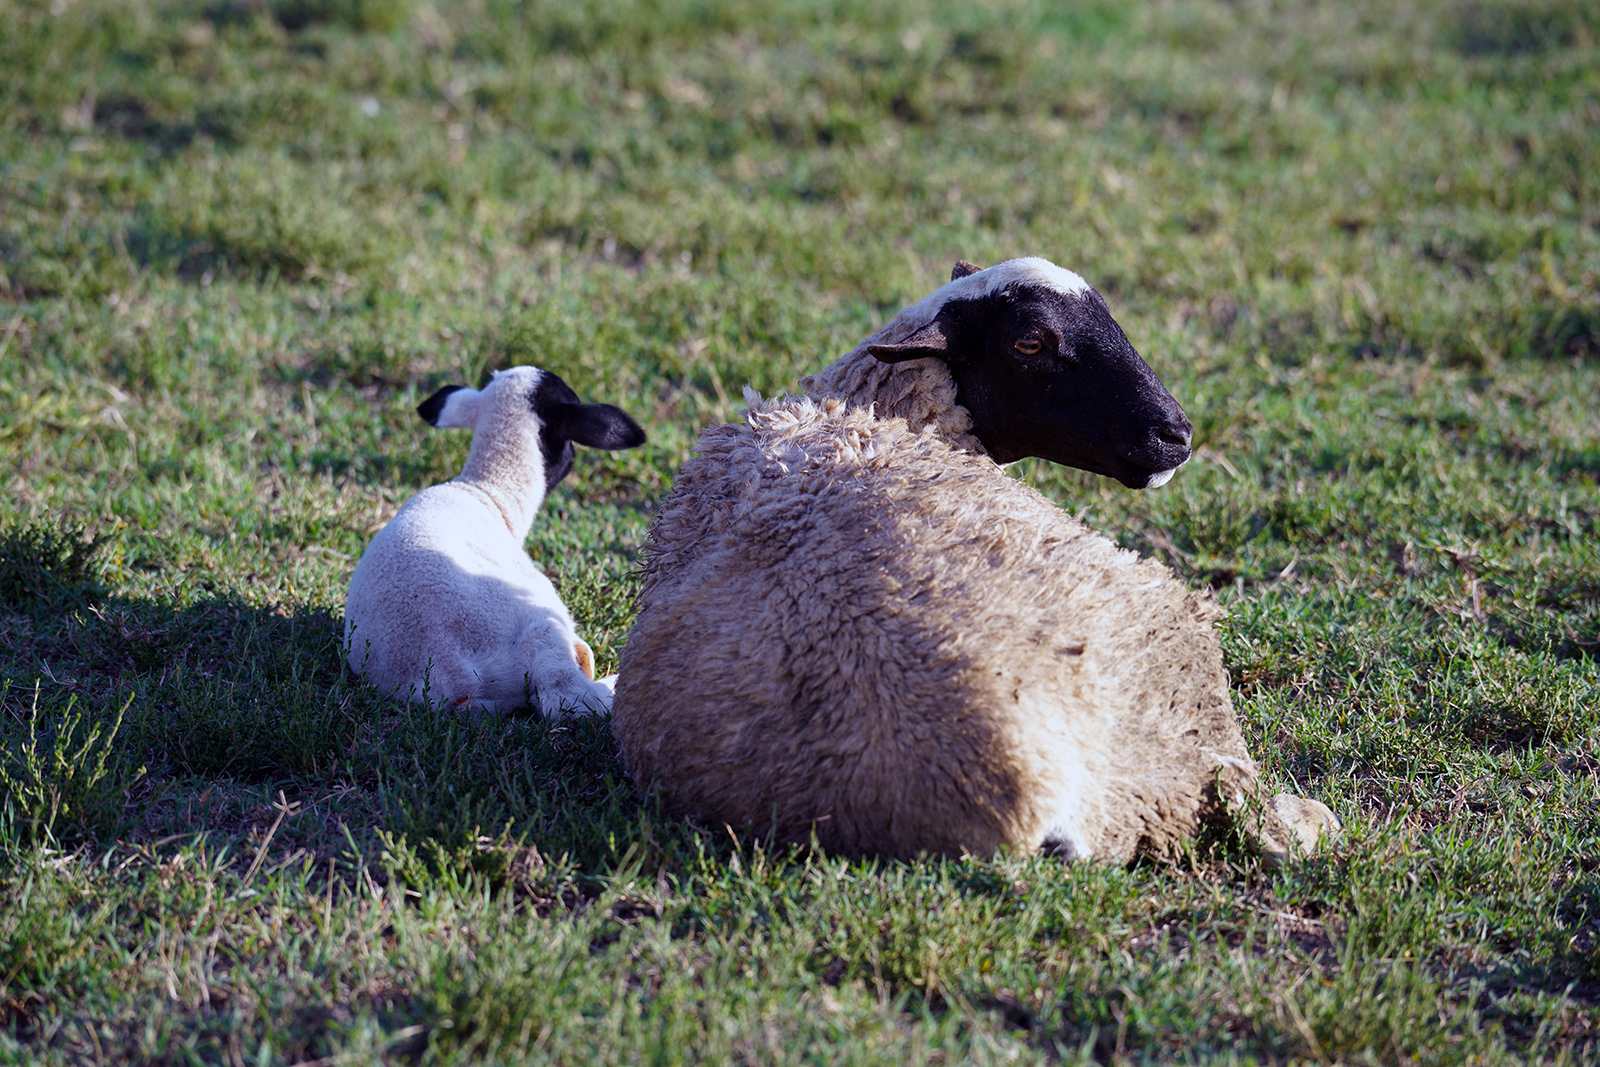 Oh hi baby lambs!